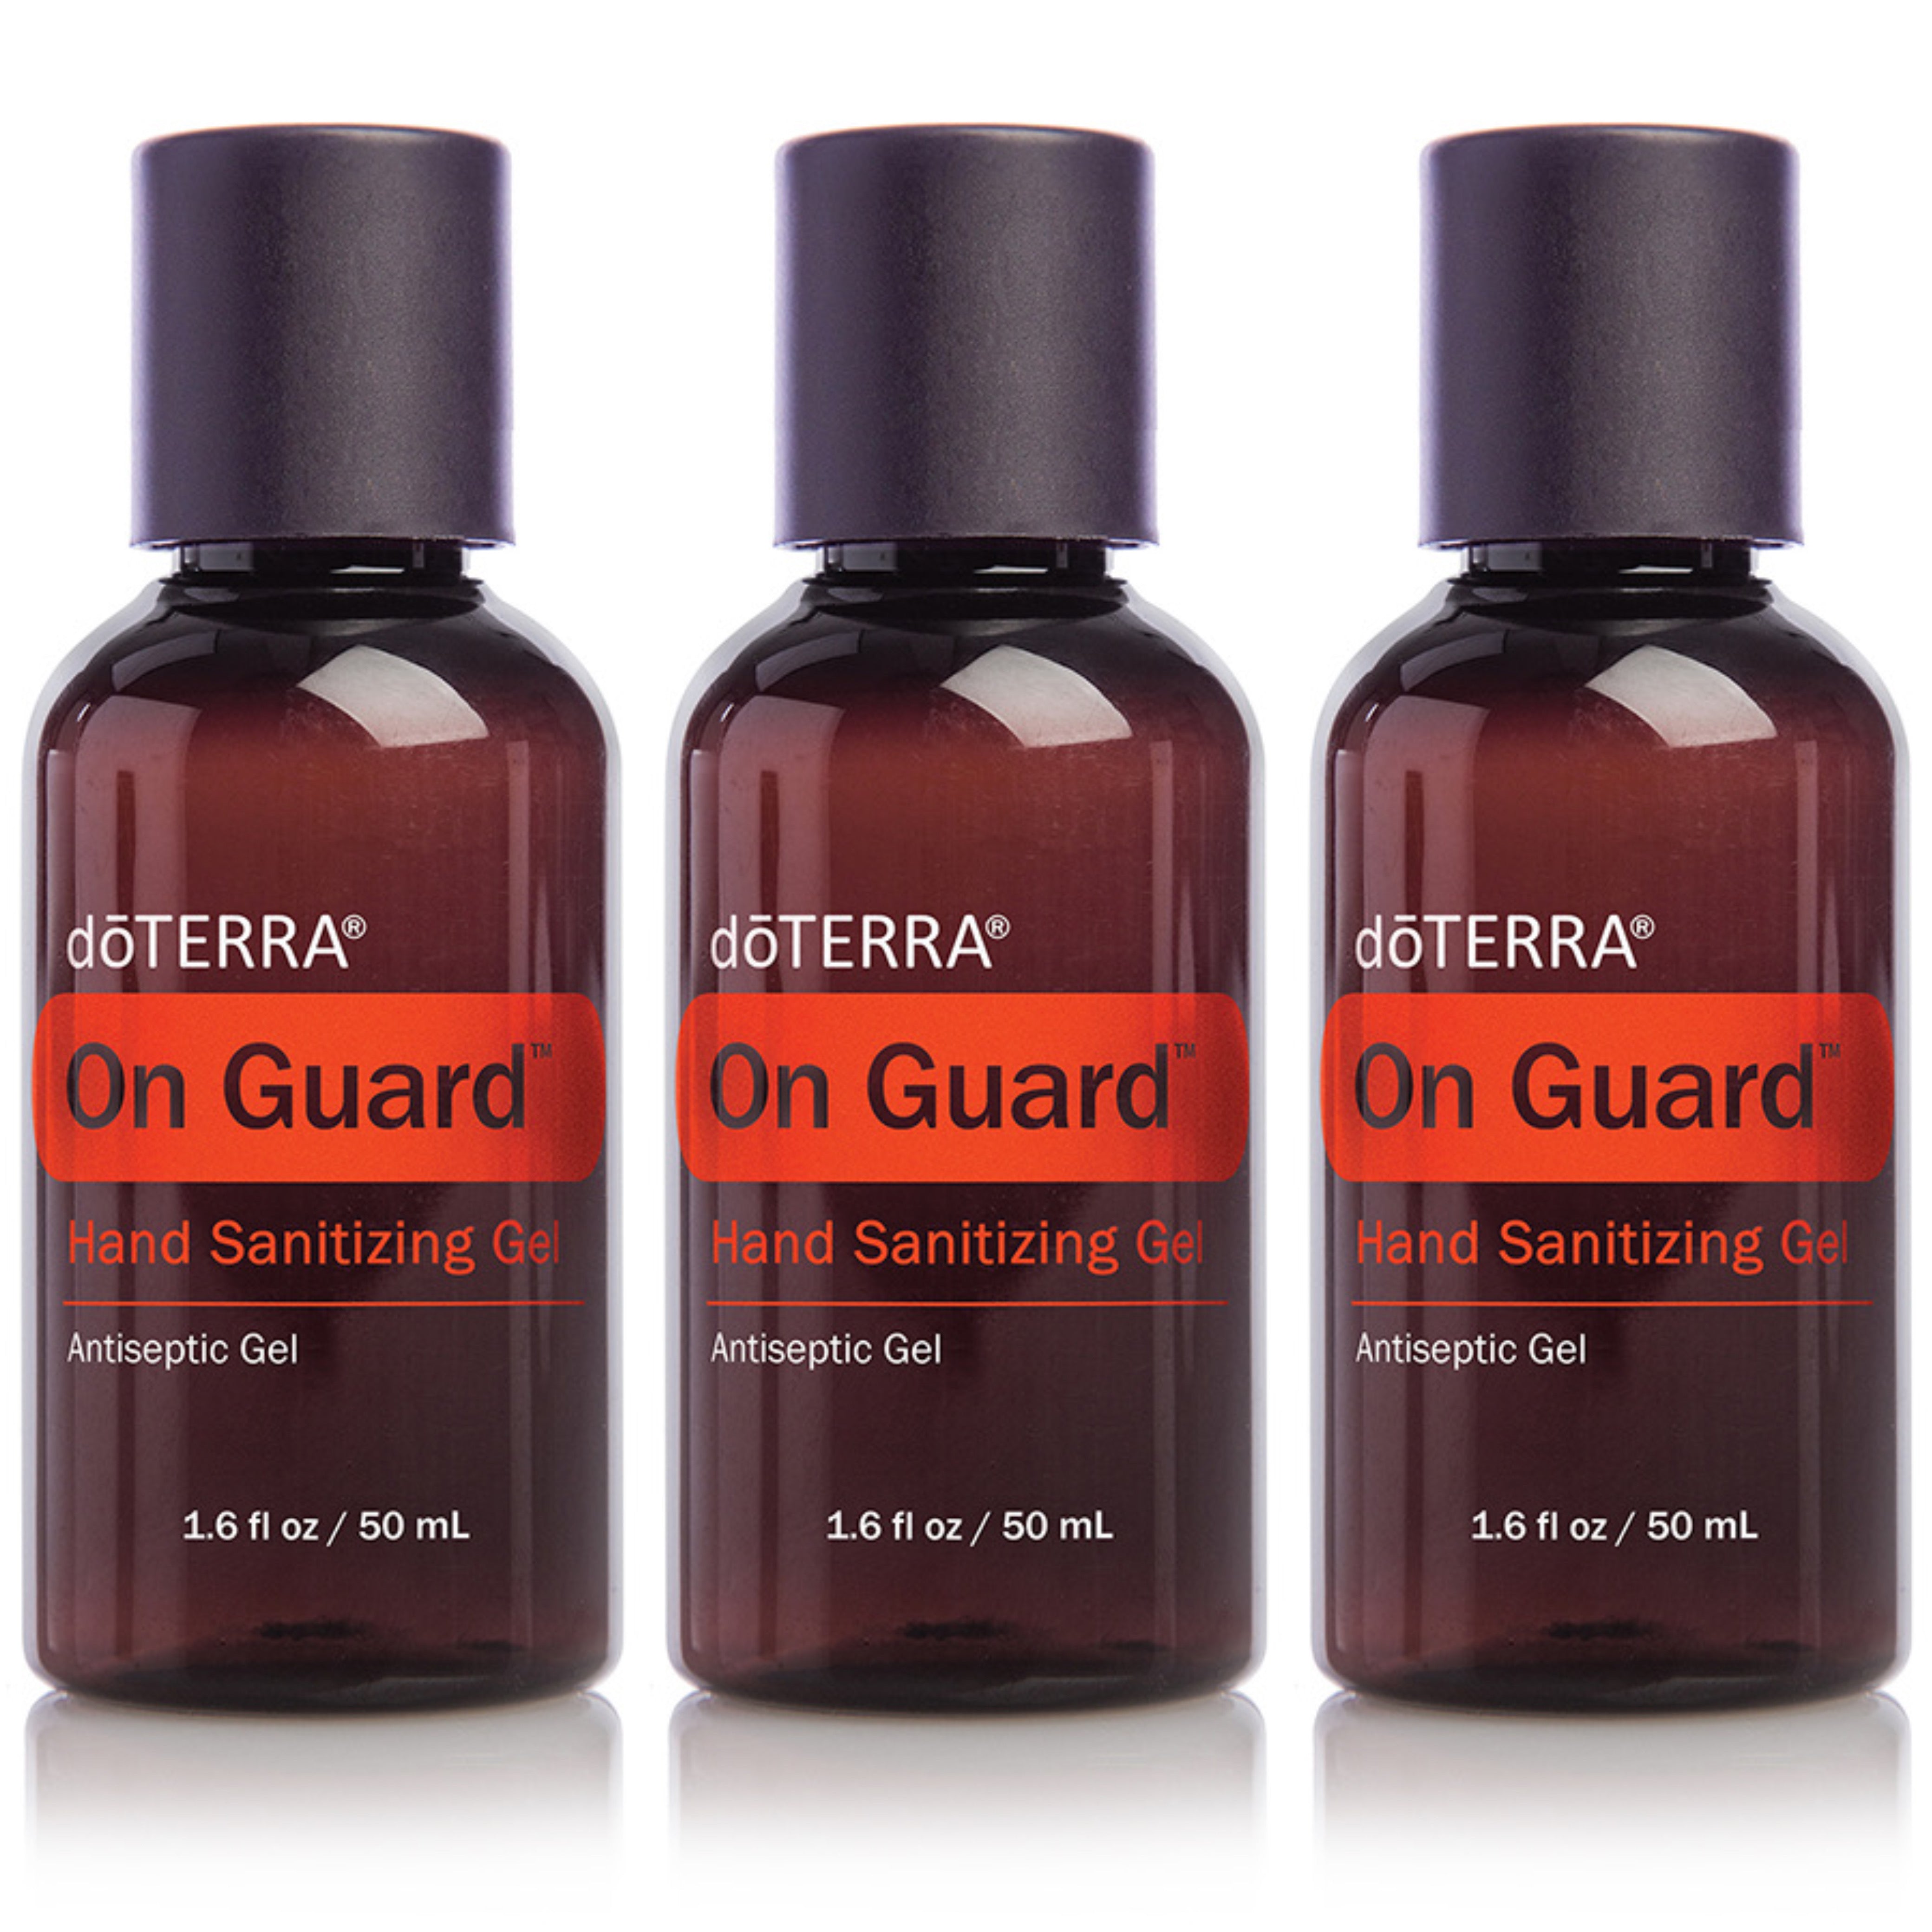 Buy doTERRA On Guard Hand Sanitizing Gel